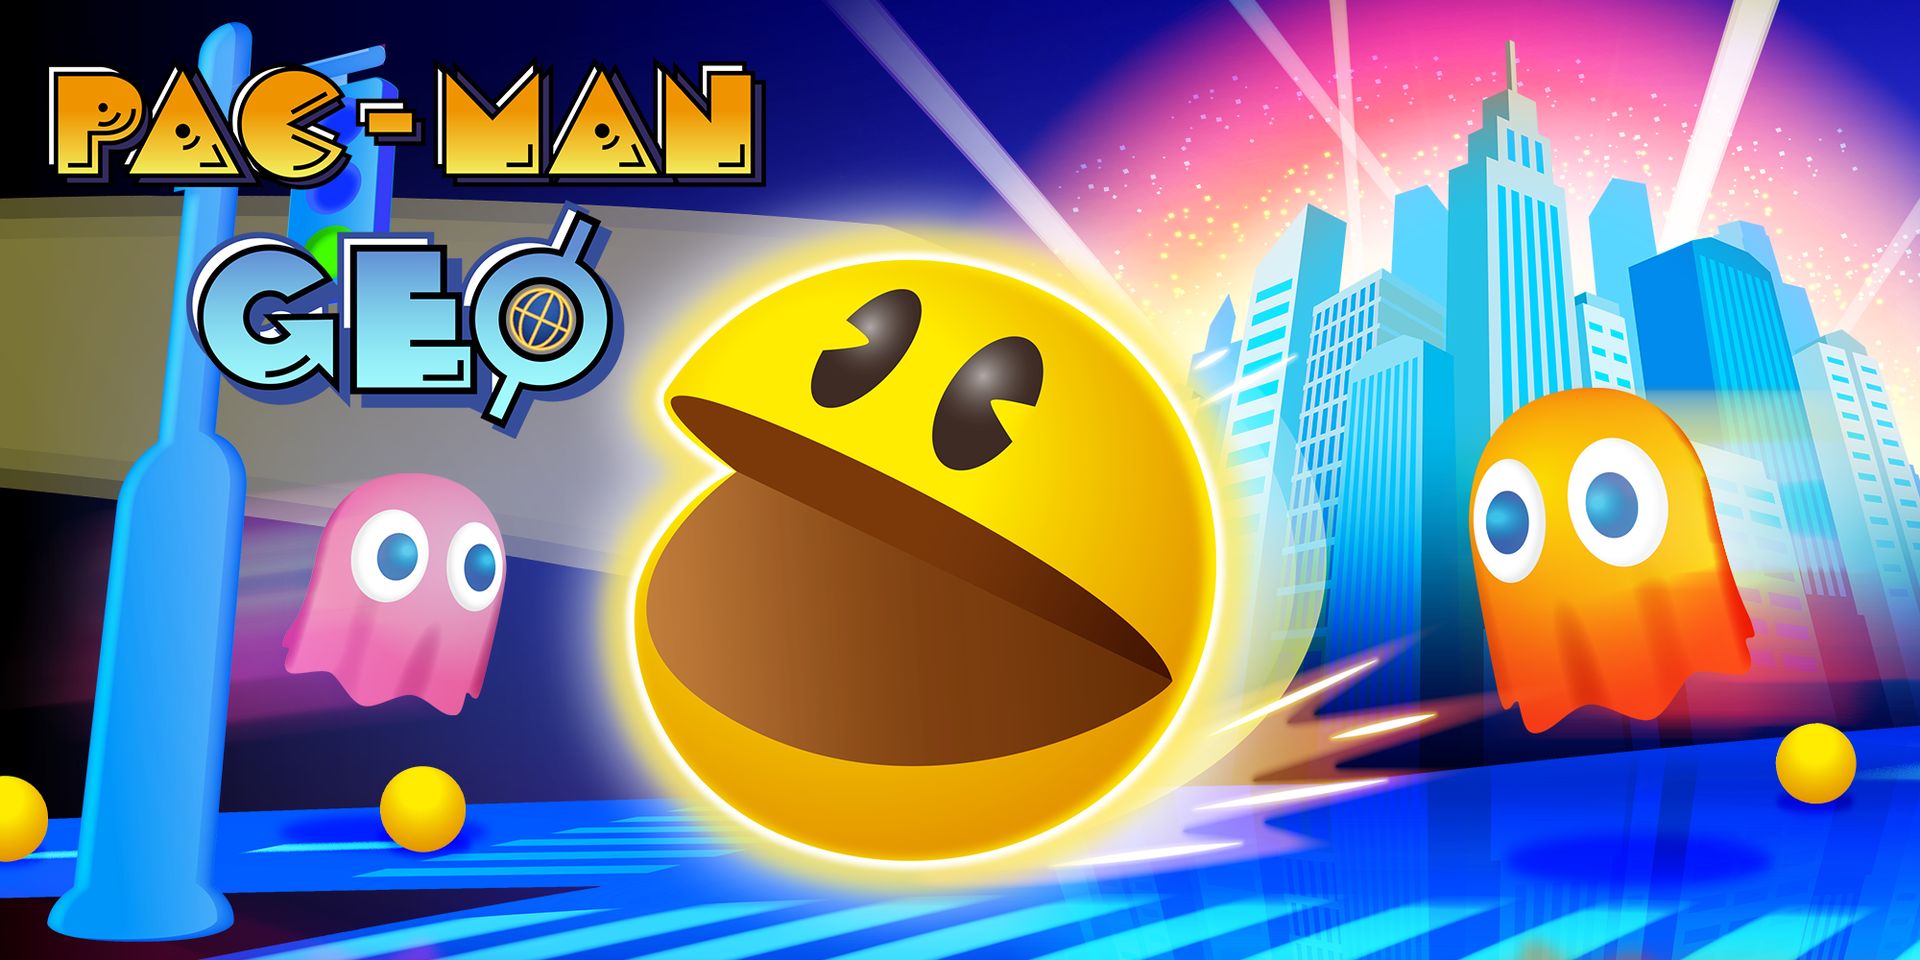 Android Ios用地理情報ゲーム Pac Man Geo 配信 パックマン 生誕40周年を記念した様々な企画が展開中 Game Watch